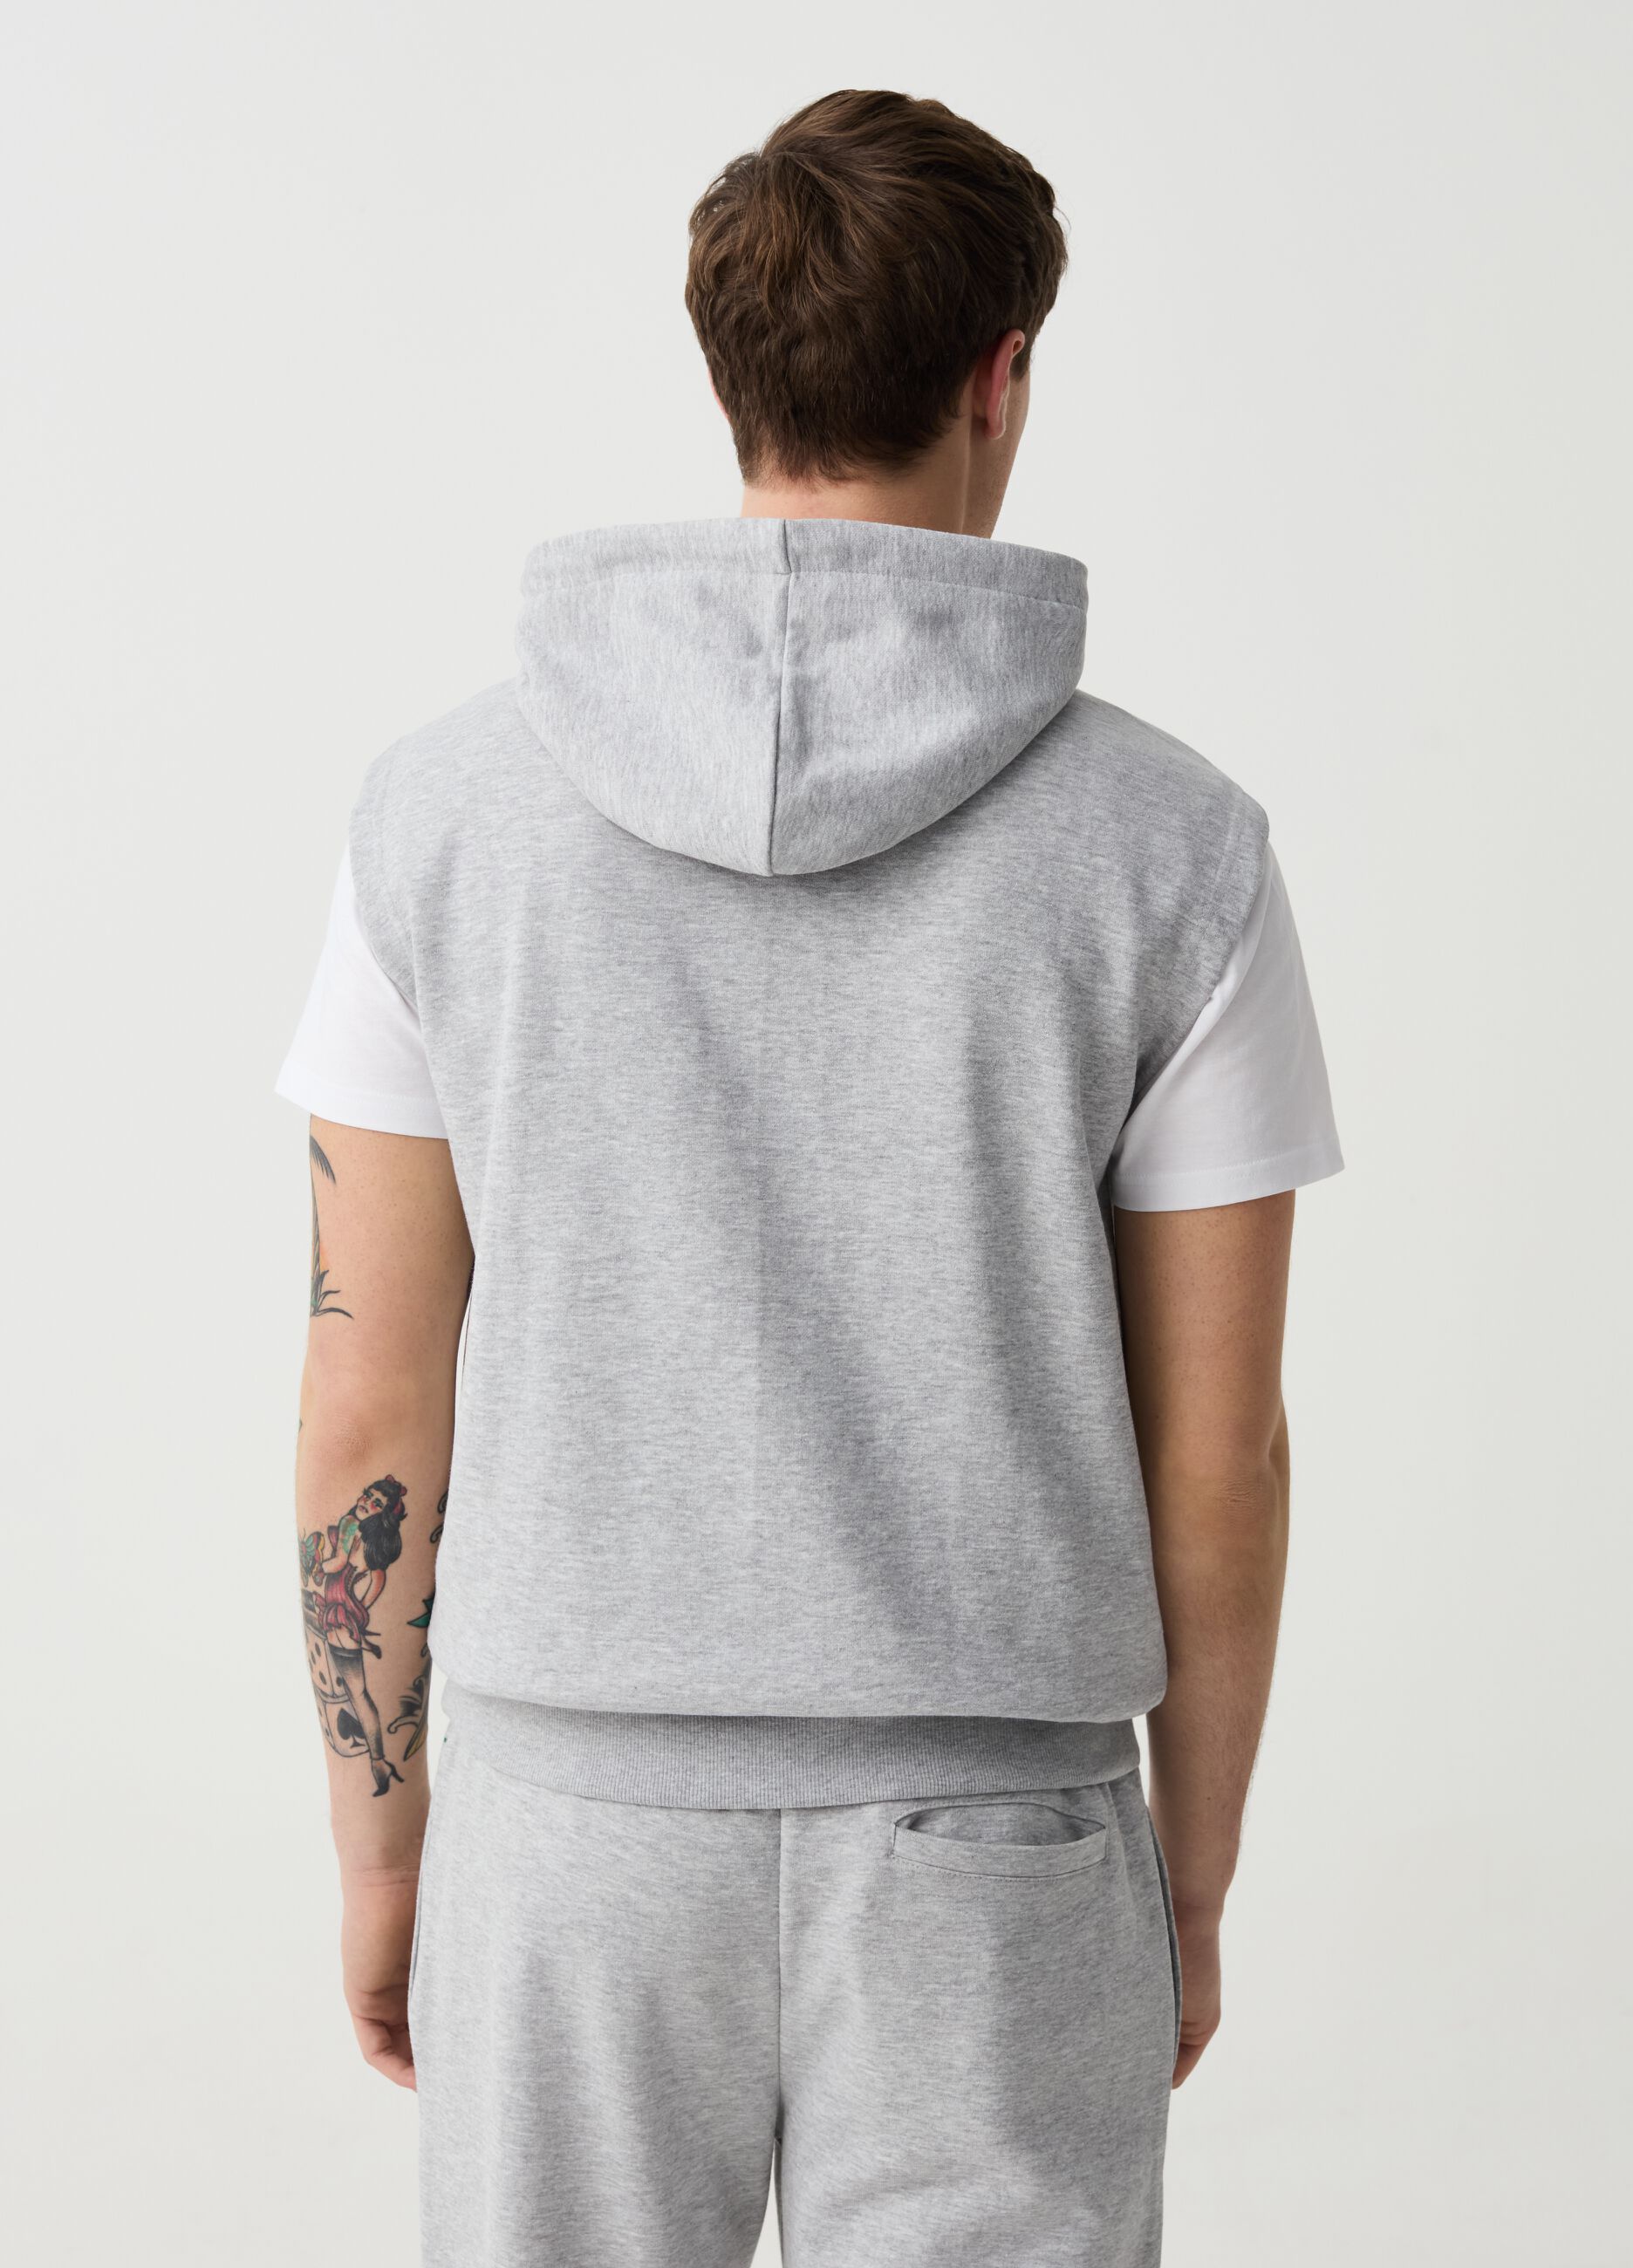 Sleeveless sweatshirt with hood and logo print